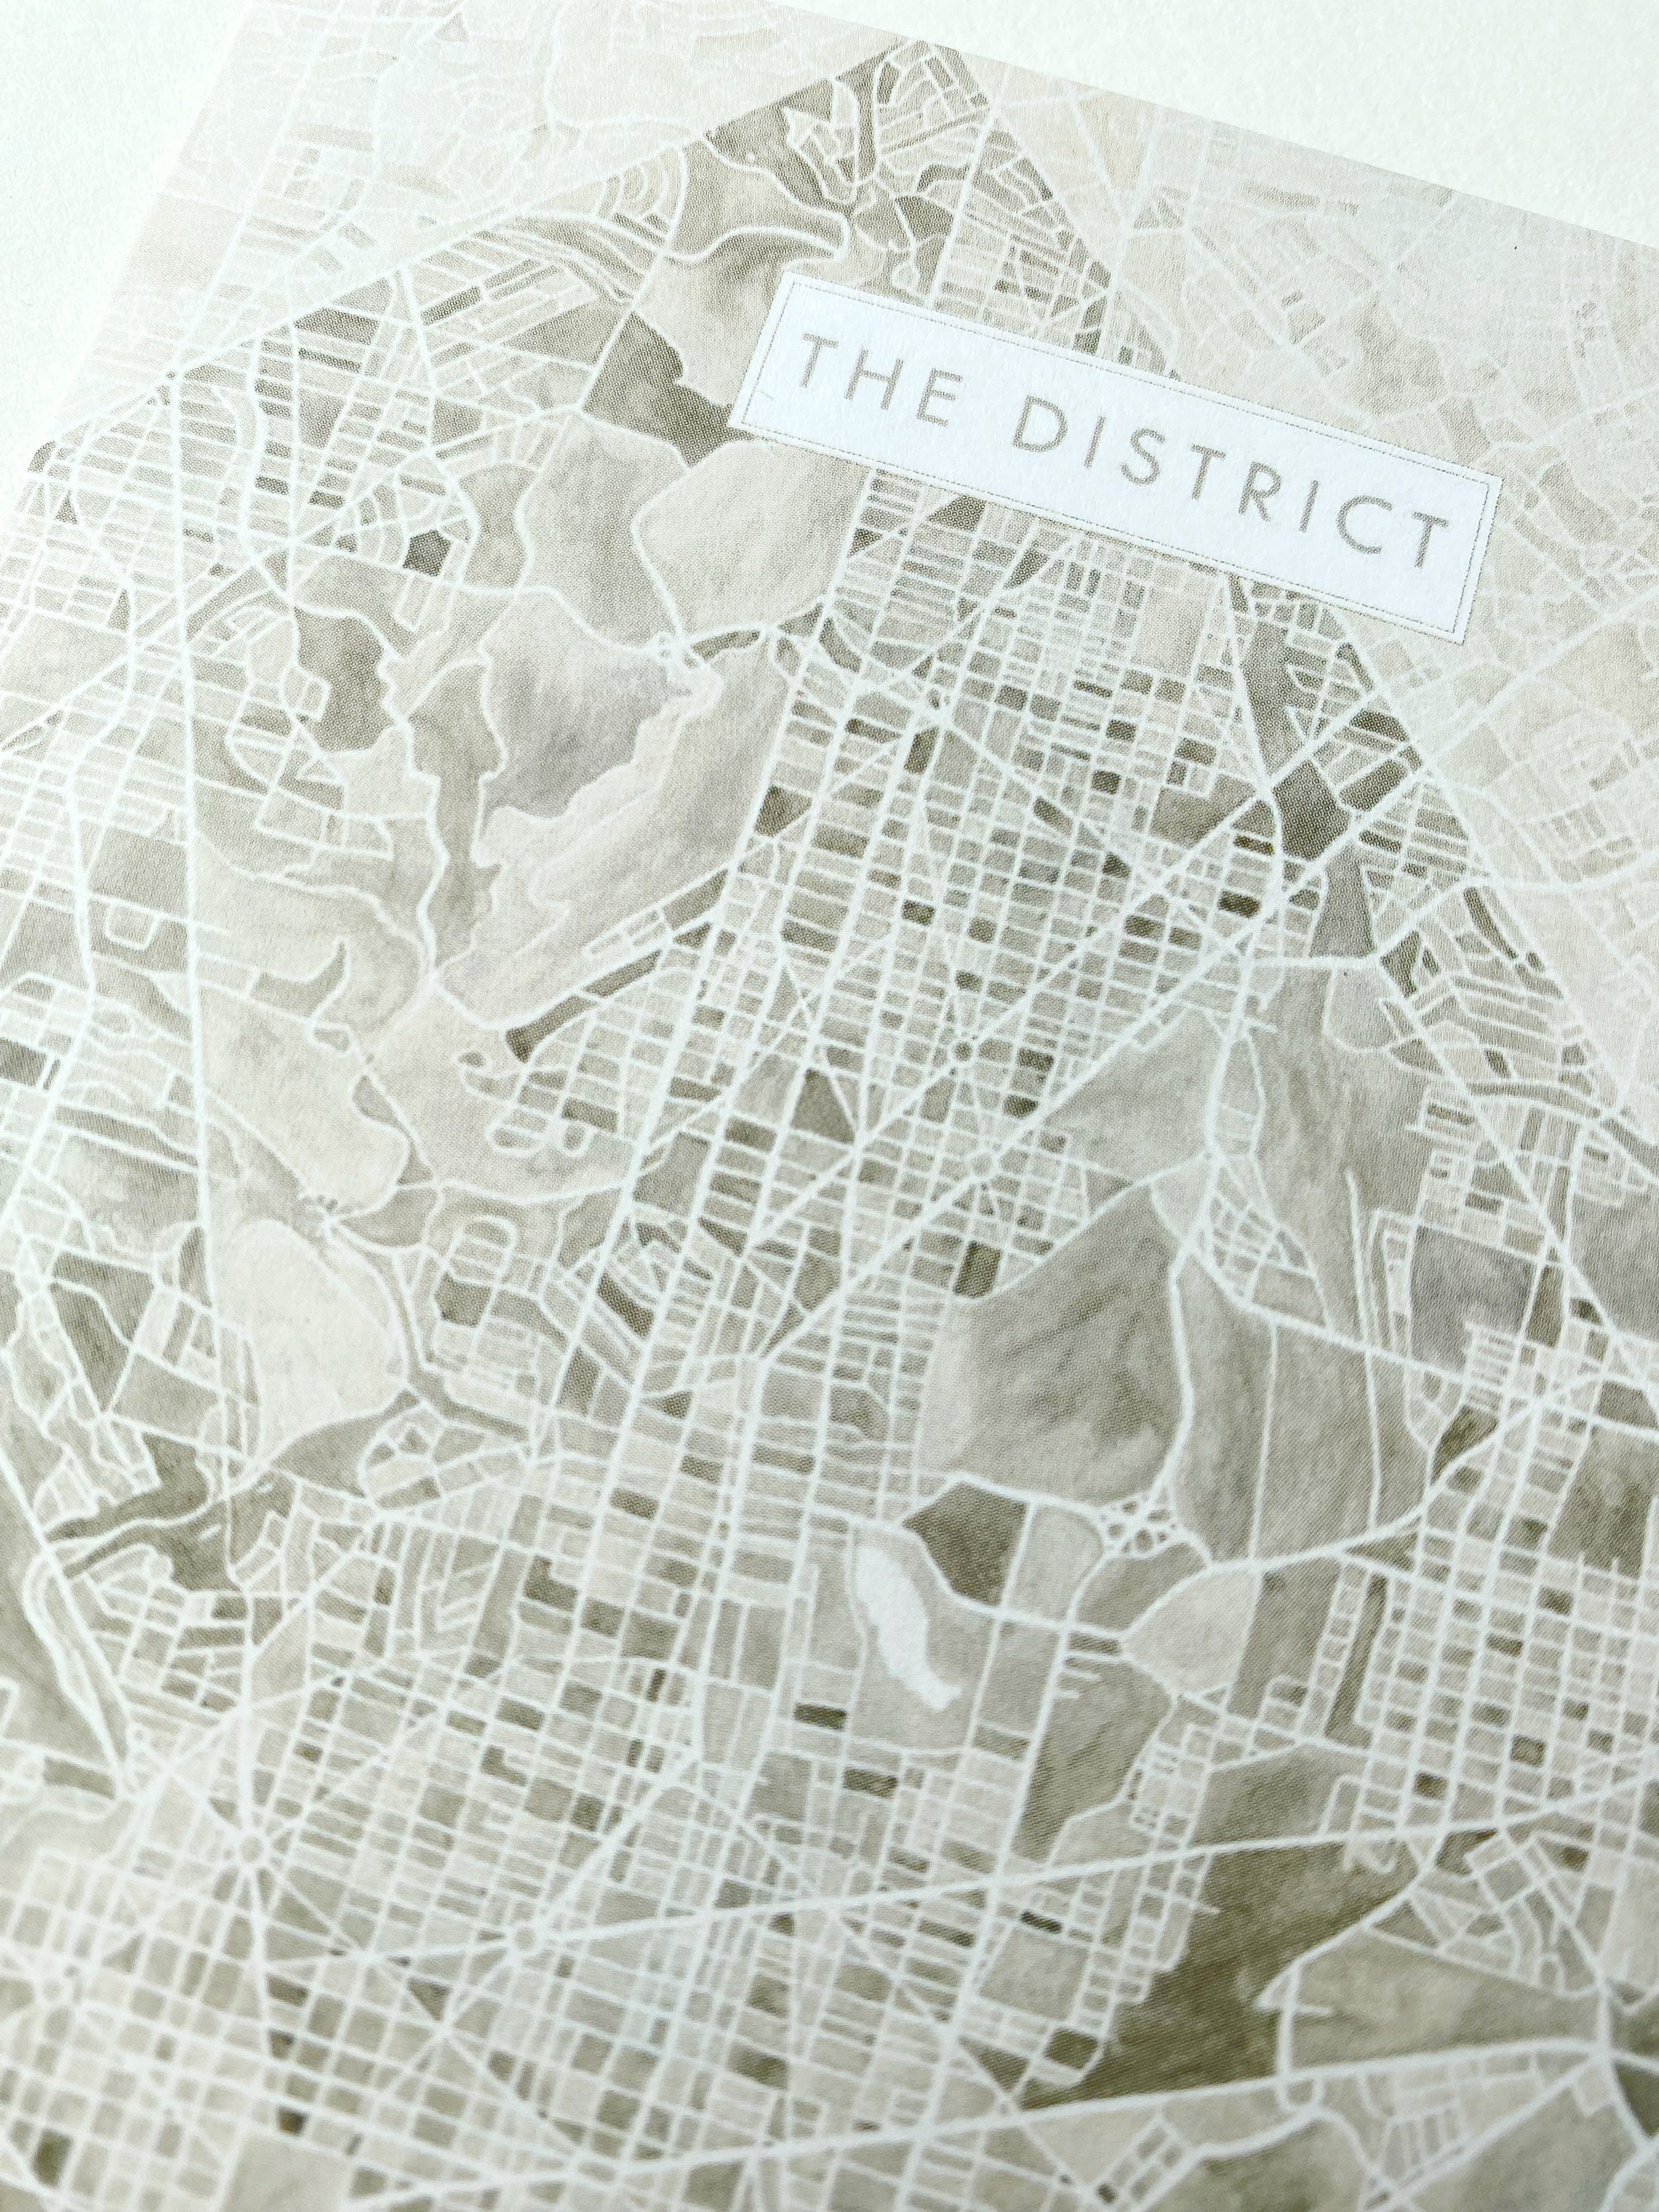 THE DISTRICT Washington DC Watercolor Map - city nickname greeting card